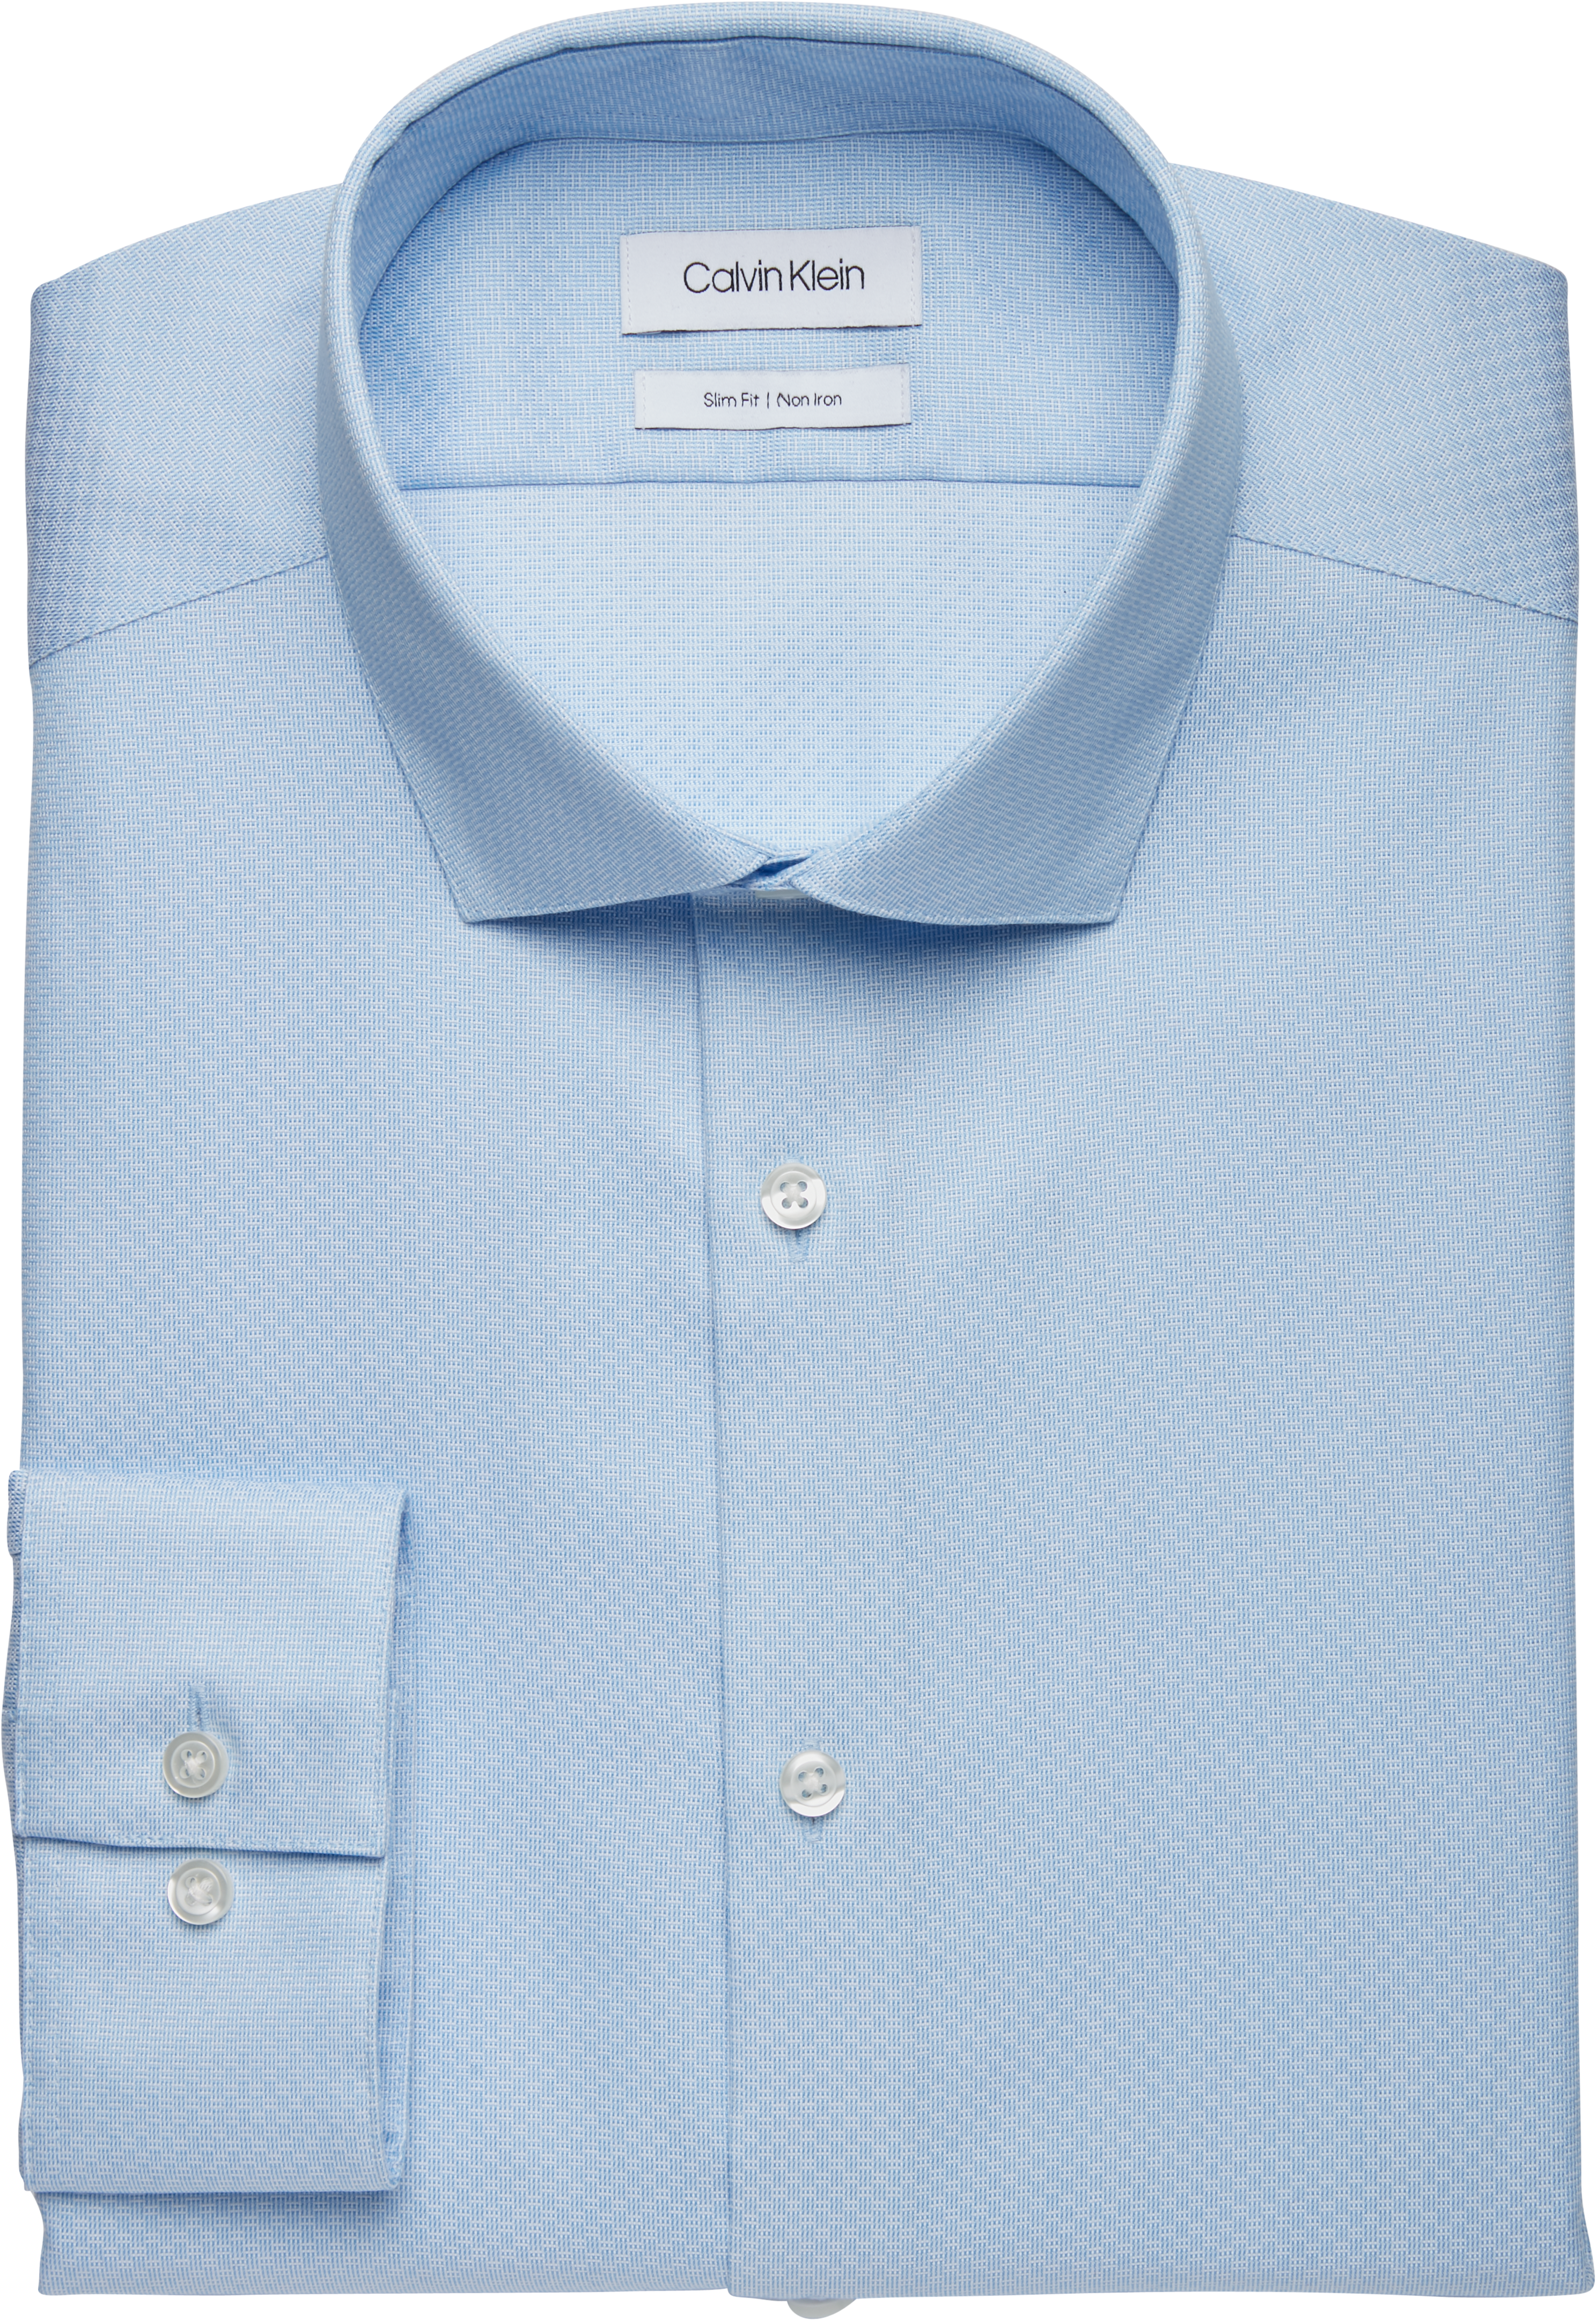 Calvin Klein Light Blue Slim Fit Dress Shirt - Men's Sale | Men's Wearhouse